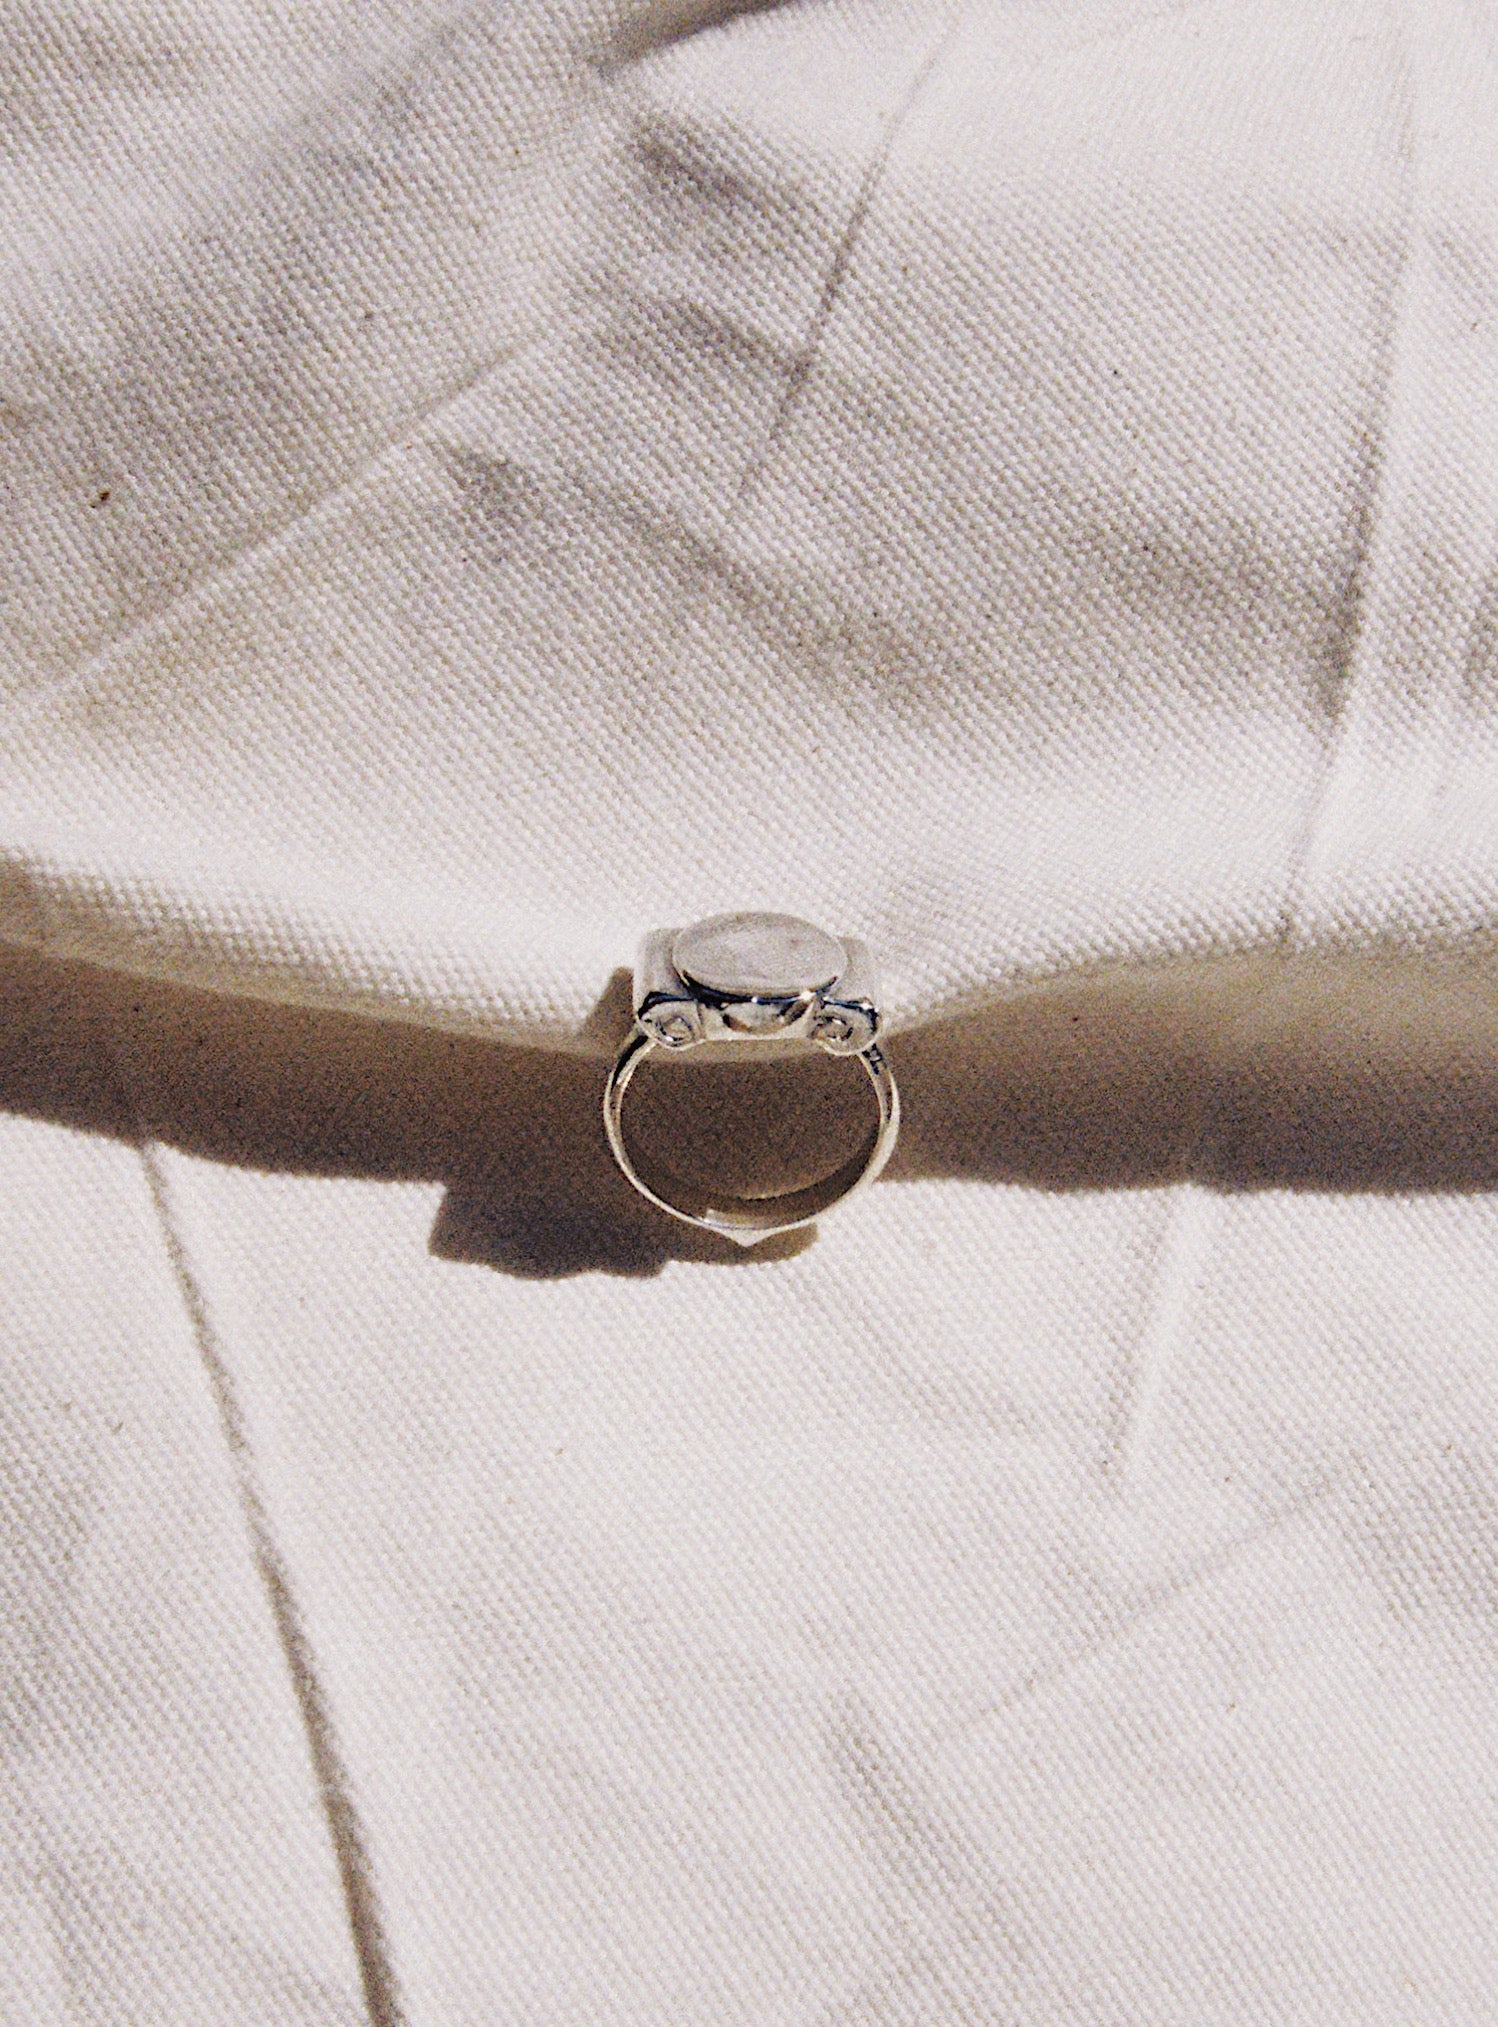 Ionic ring